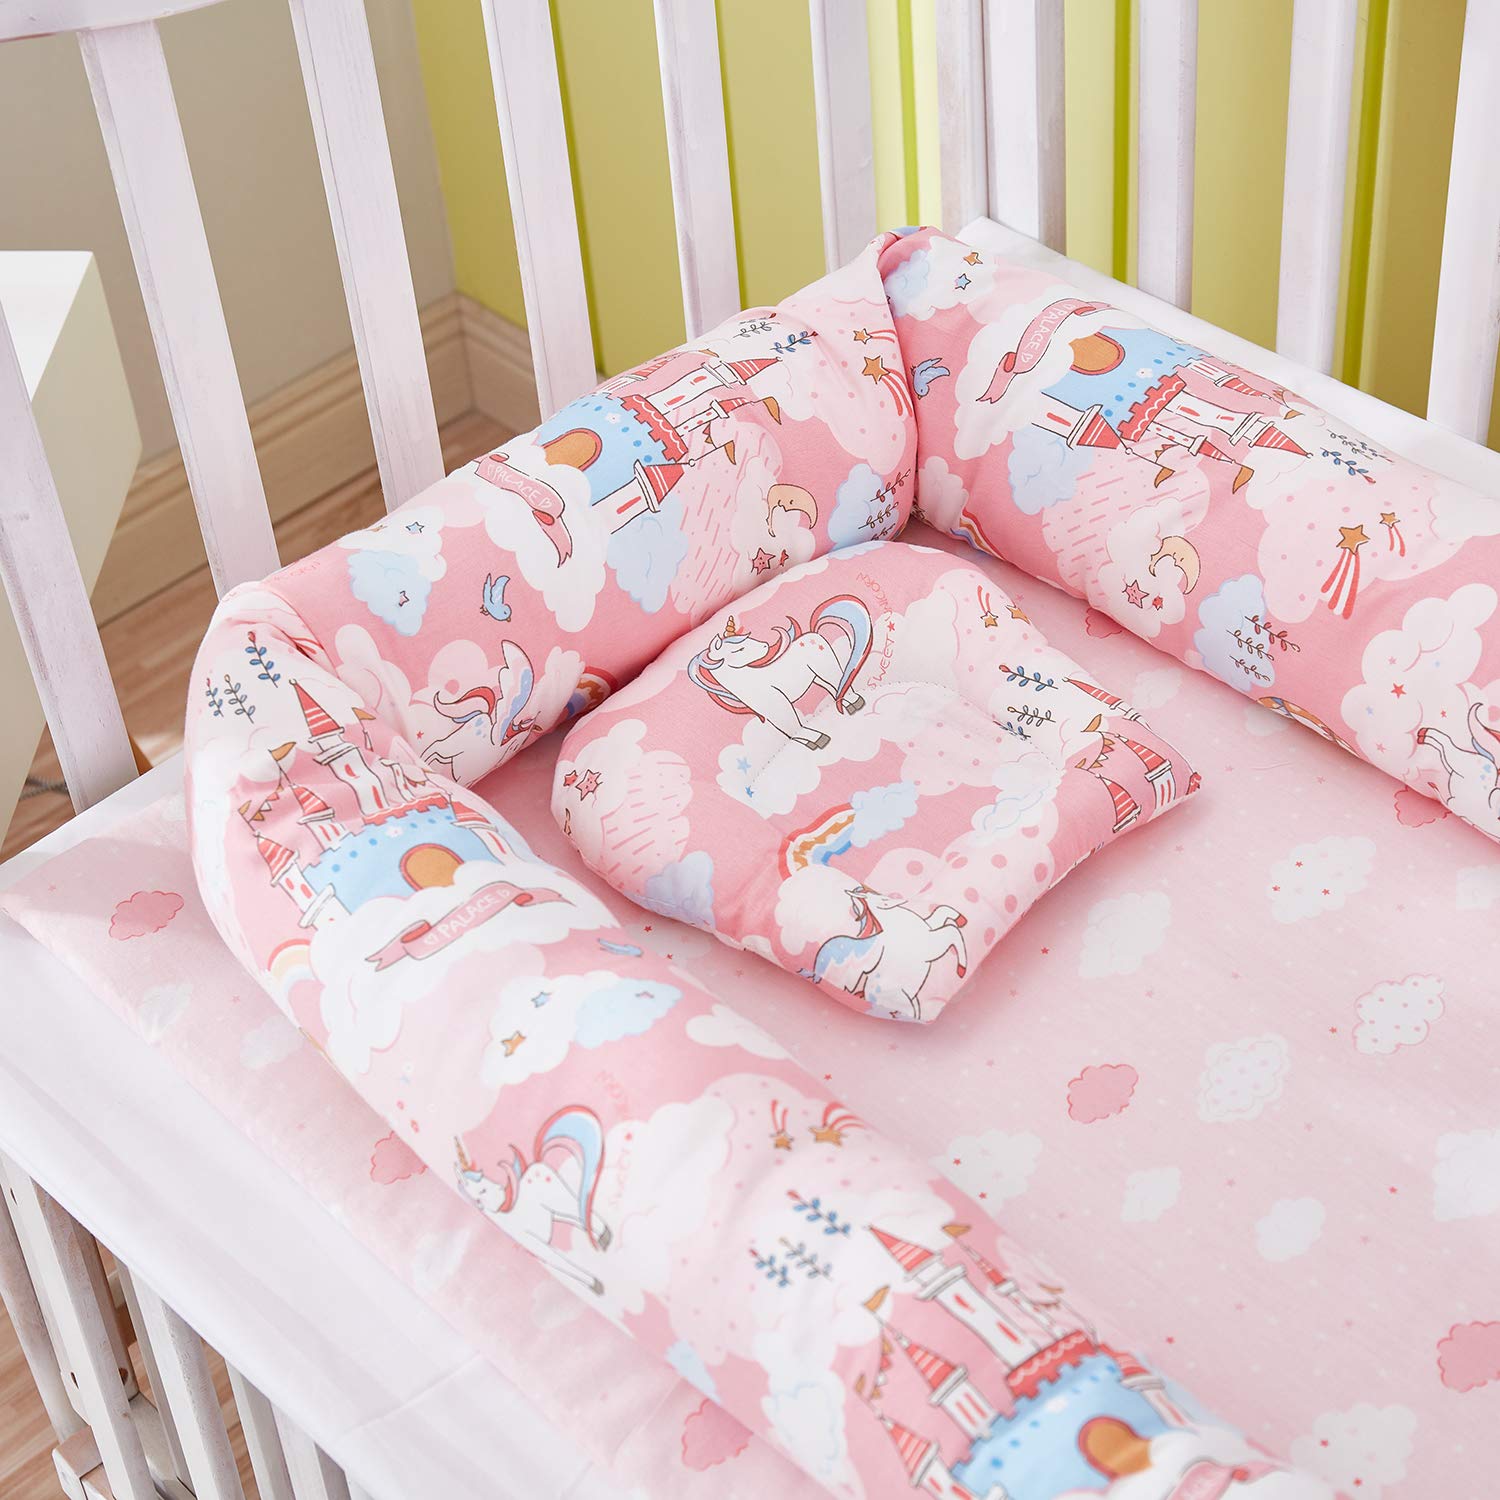 Brandream Baby Nest Bed Unicorn, Pink Newborn Lounger Portable